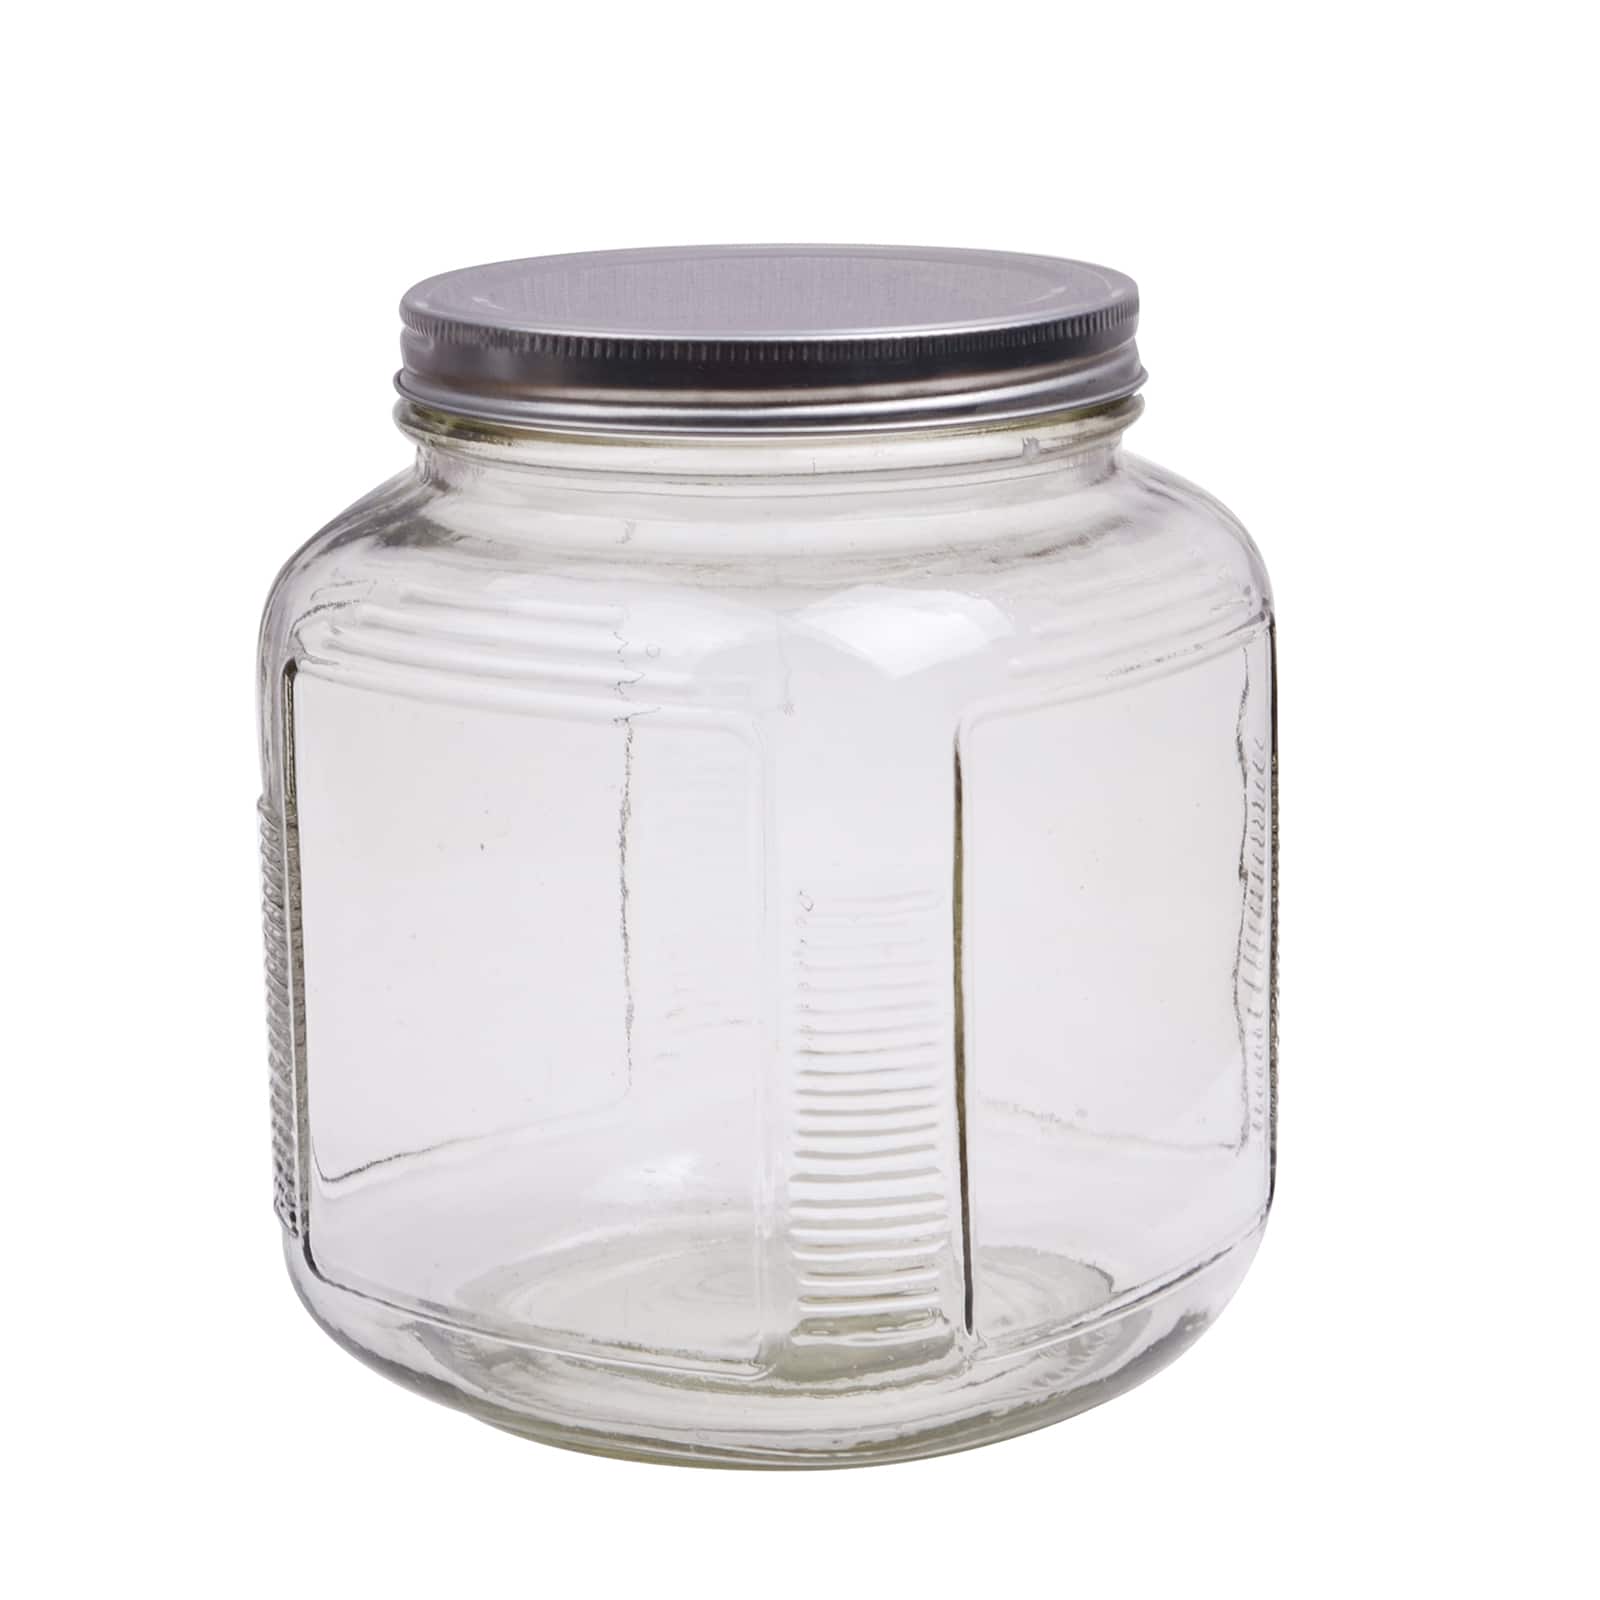 Large Acrylic Candy Jar, 1 Gallon Jar With Lid